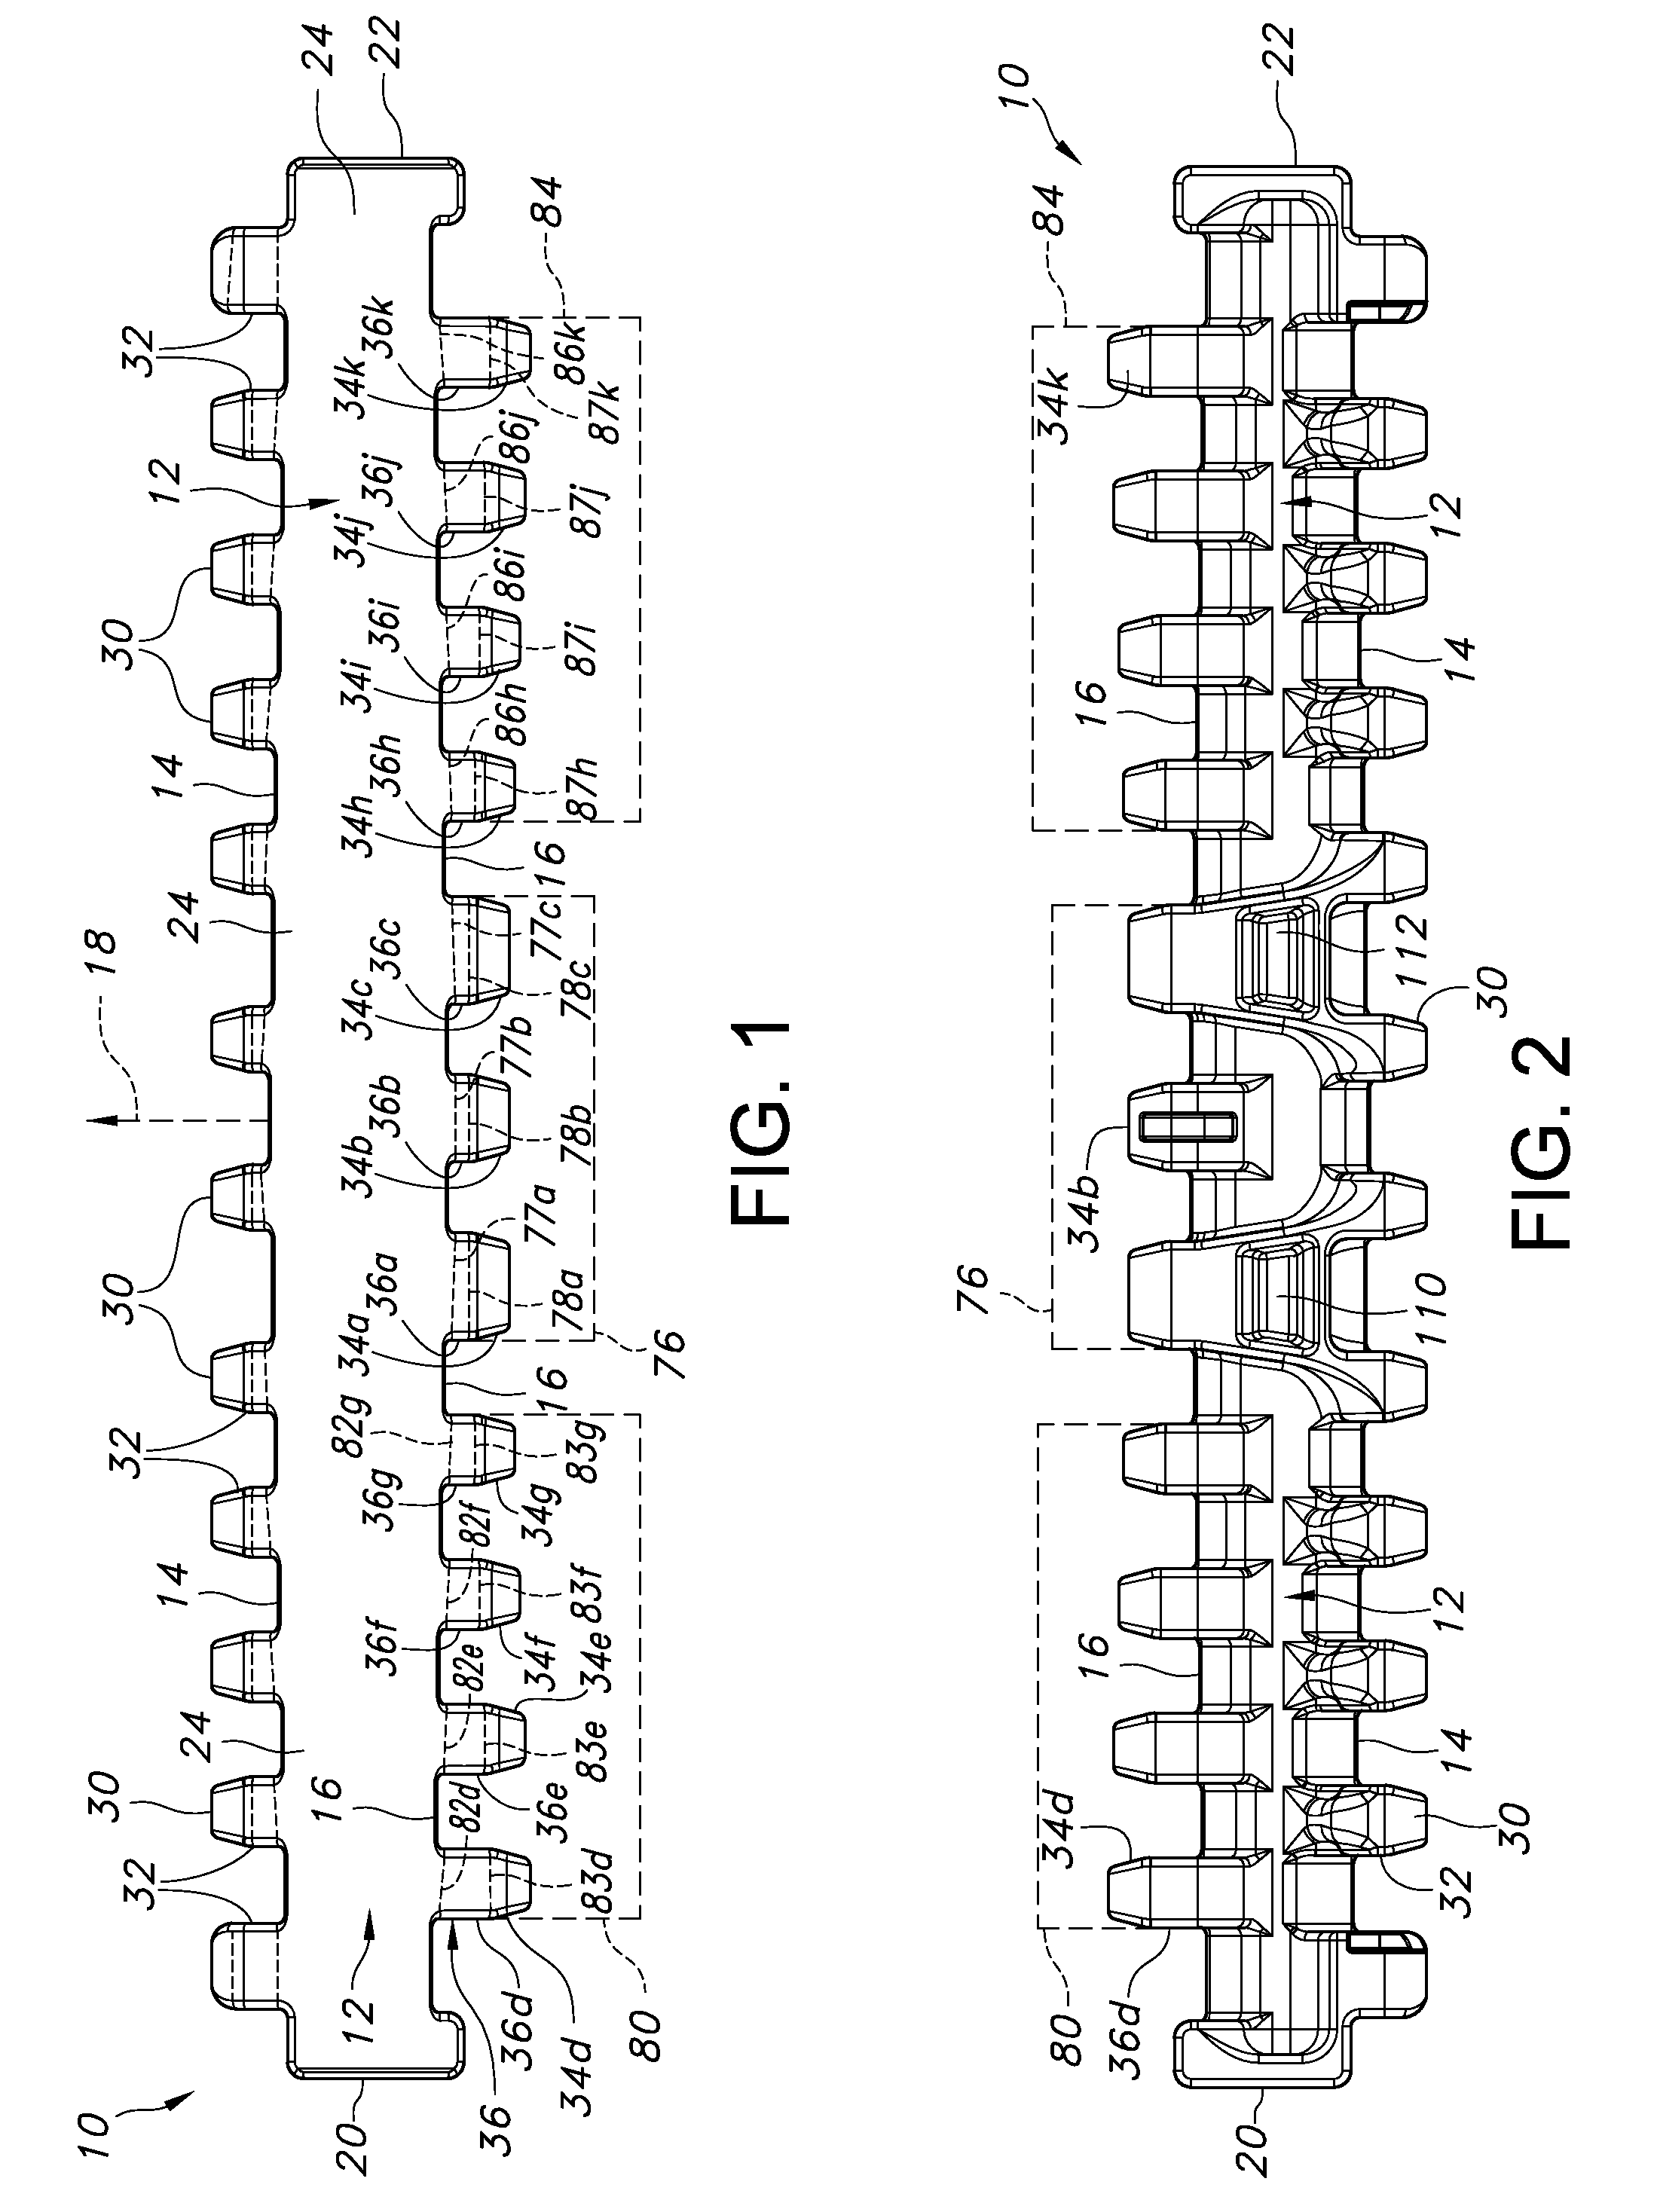 Radius chain modular conveyor